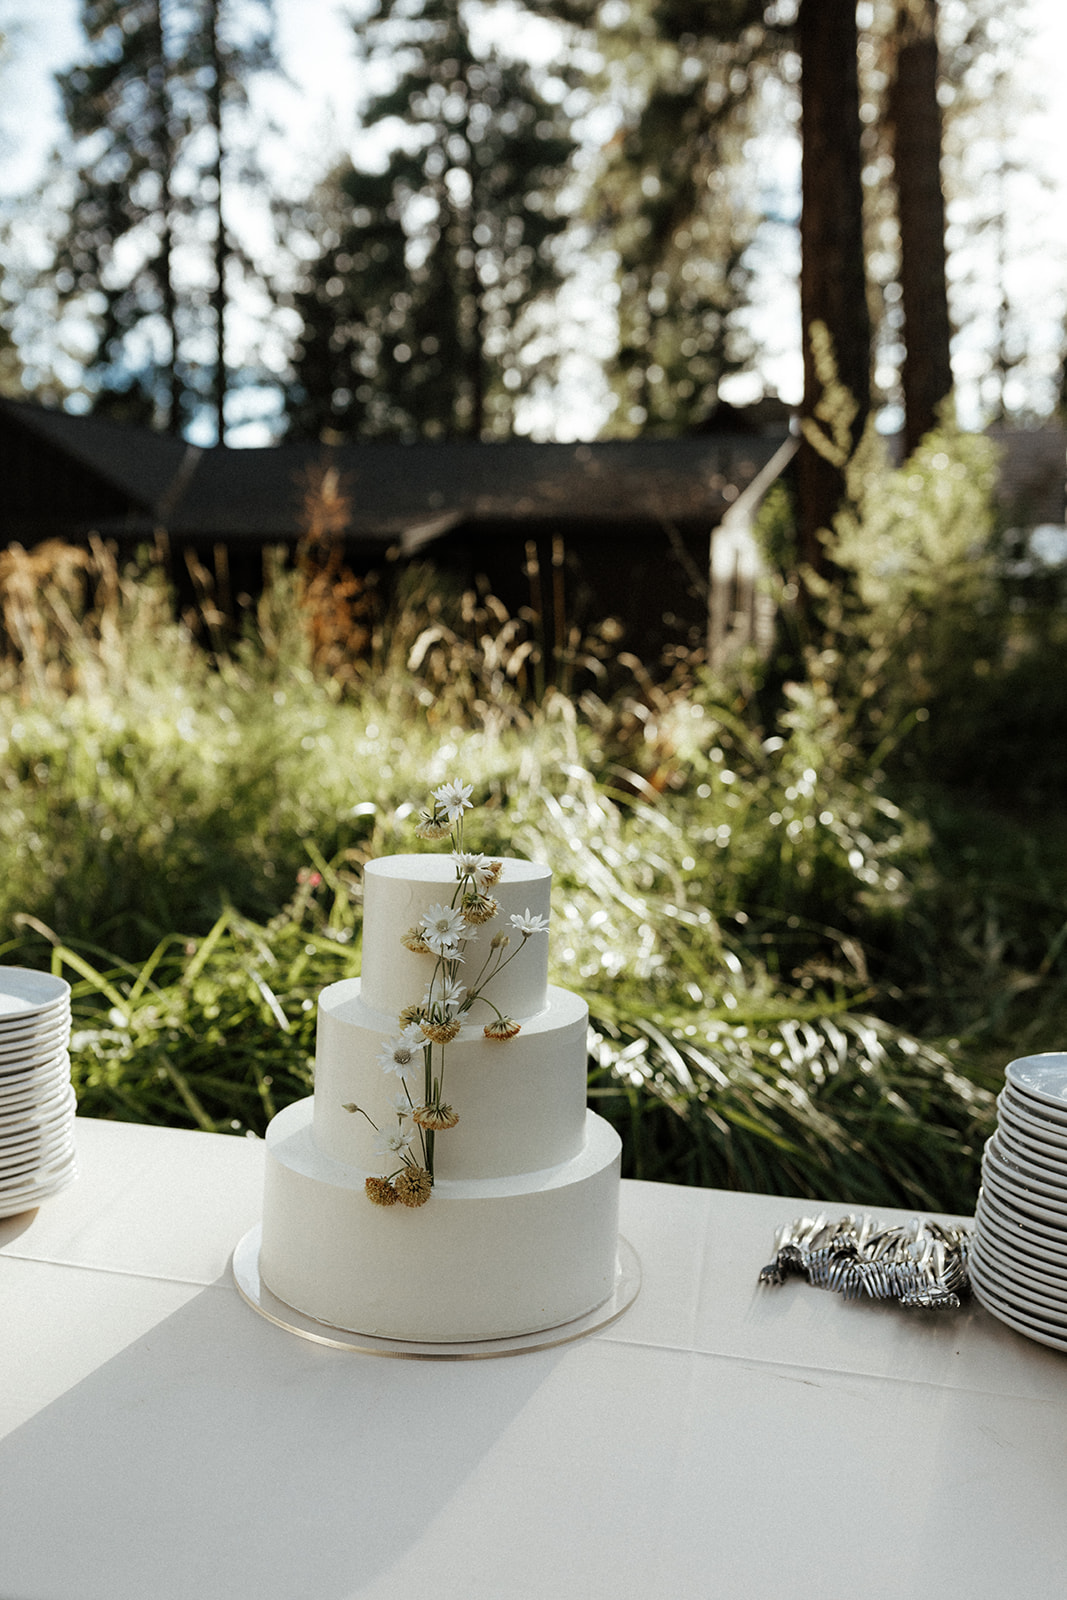 central oregon wedding cake at lake creek lodge